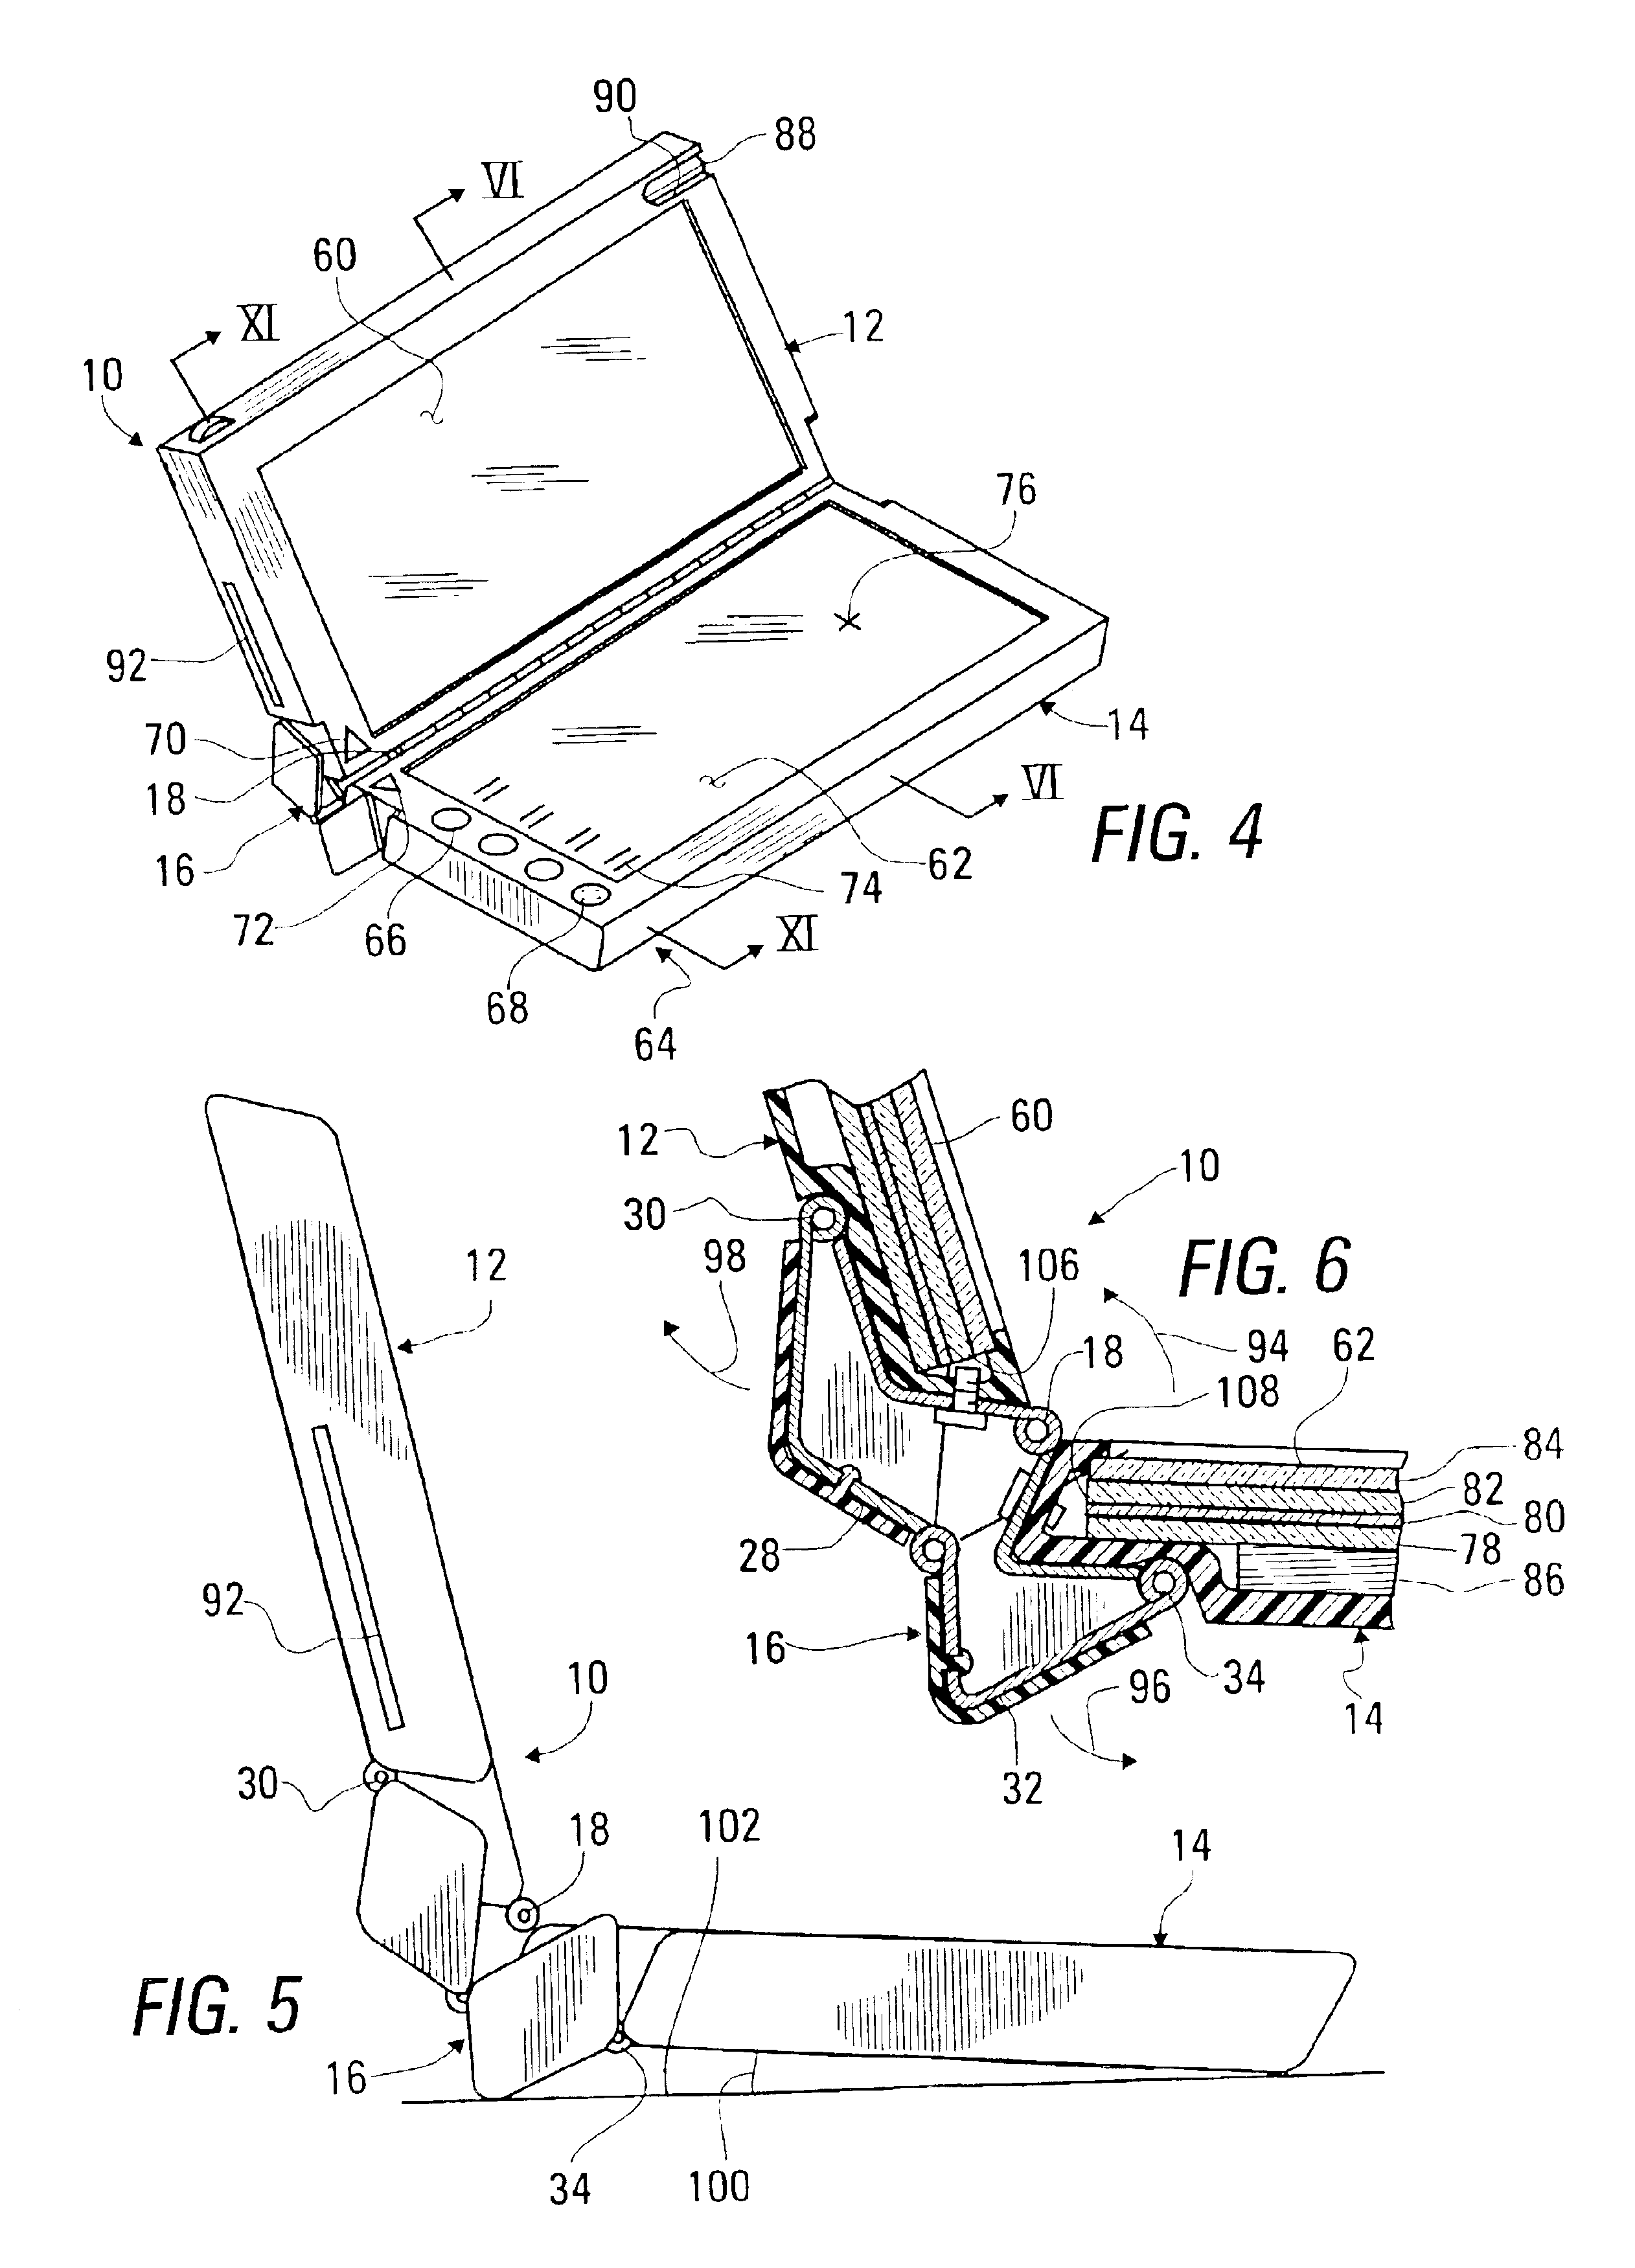 Portable computer having a split screen and a multi-purpose hinge